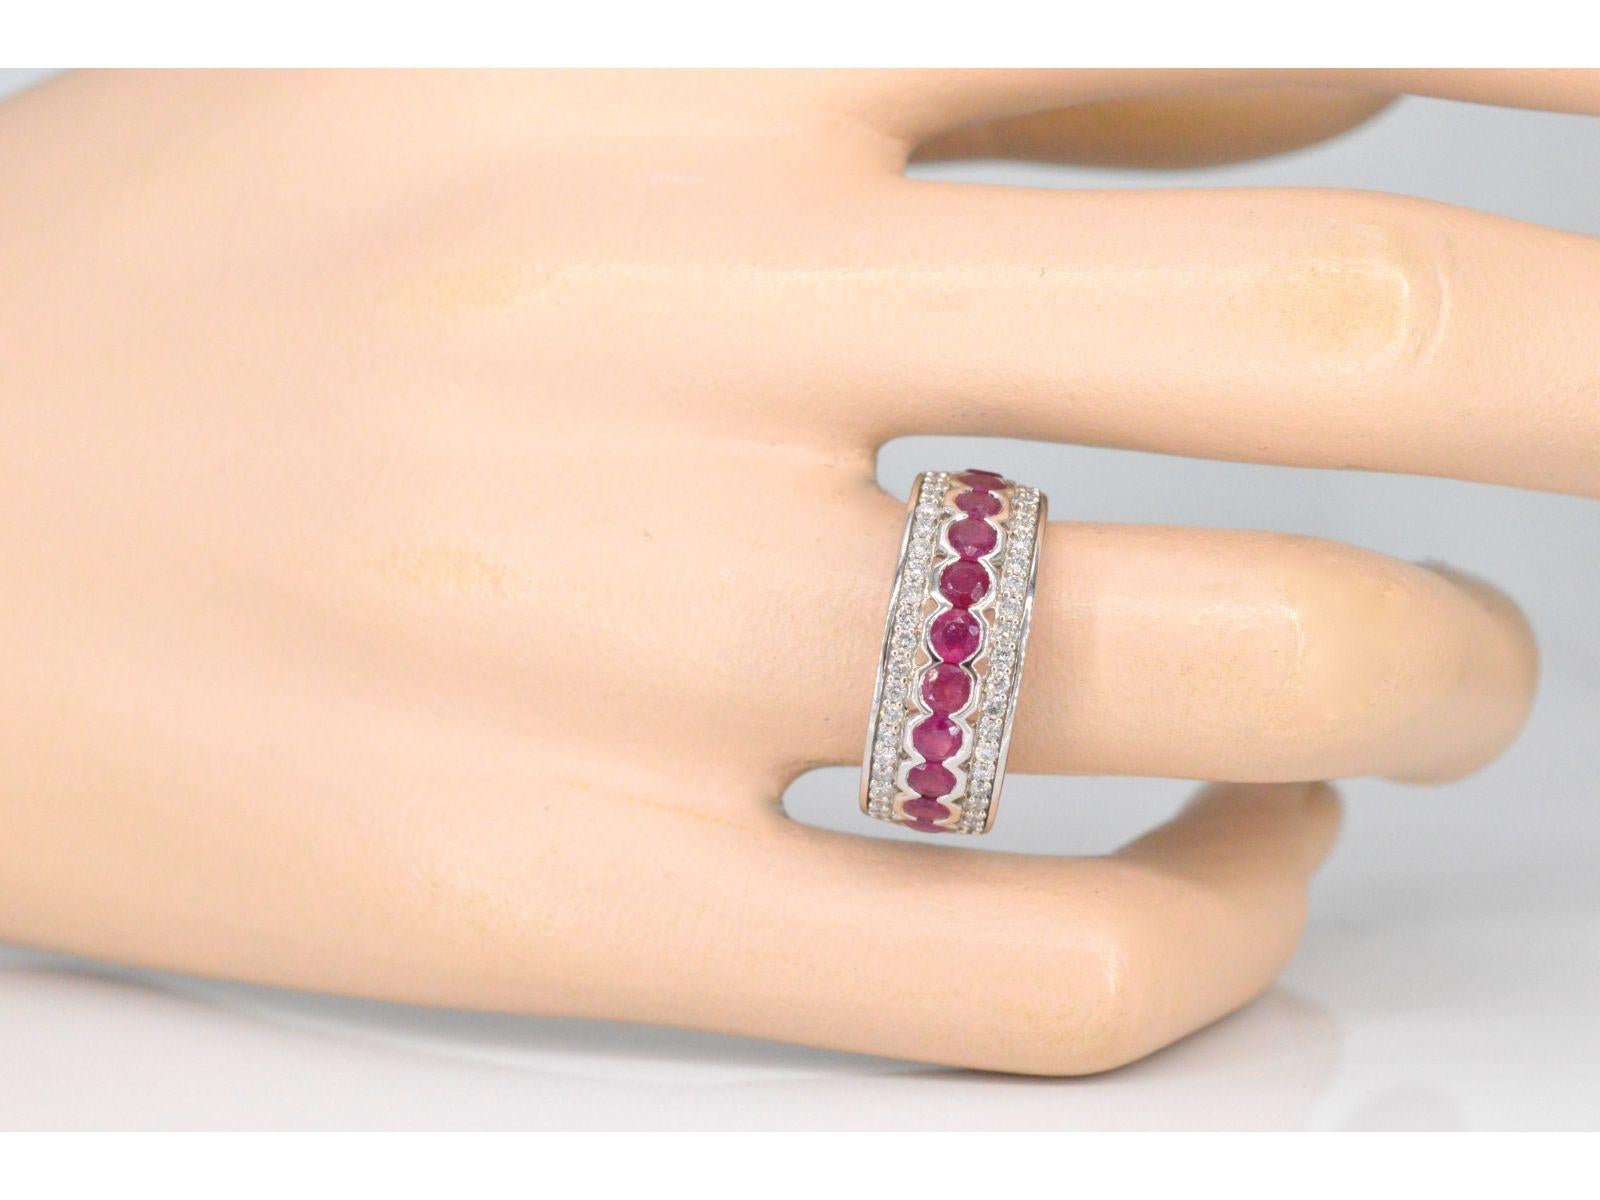 Diamonds

Weight: 0.50 carat

Cut: Brilliant cut

Colour: F-G

Clarity: SI-P

Quality: Very good

Gemstone: Ruby

Cut: Round cut

Colour: Red

Weight: 1.50 carats

Jewel: Ring

Weight: 5.5 gram

Hallmark: 14 karat

Ring size: 54 (17.25